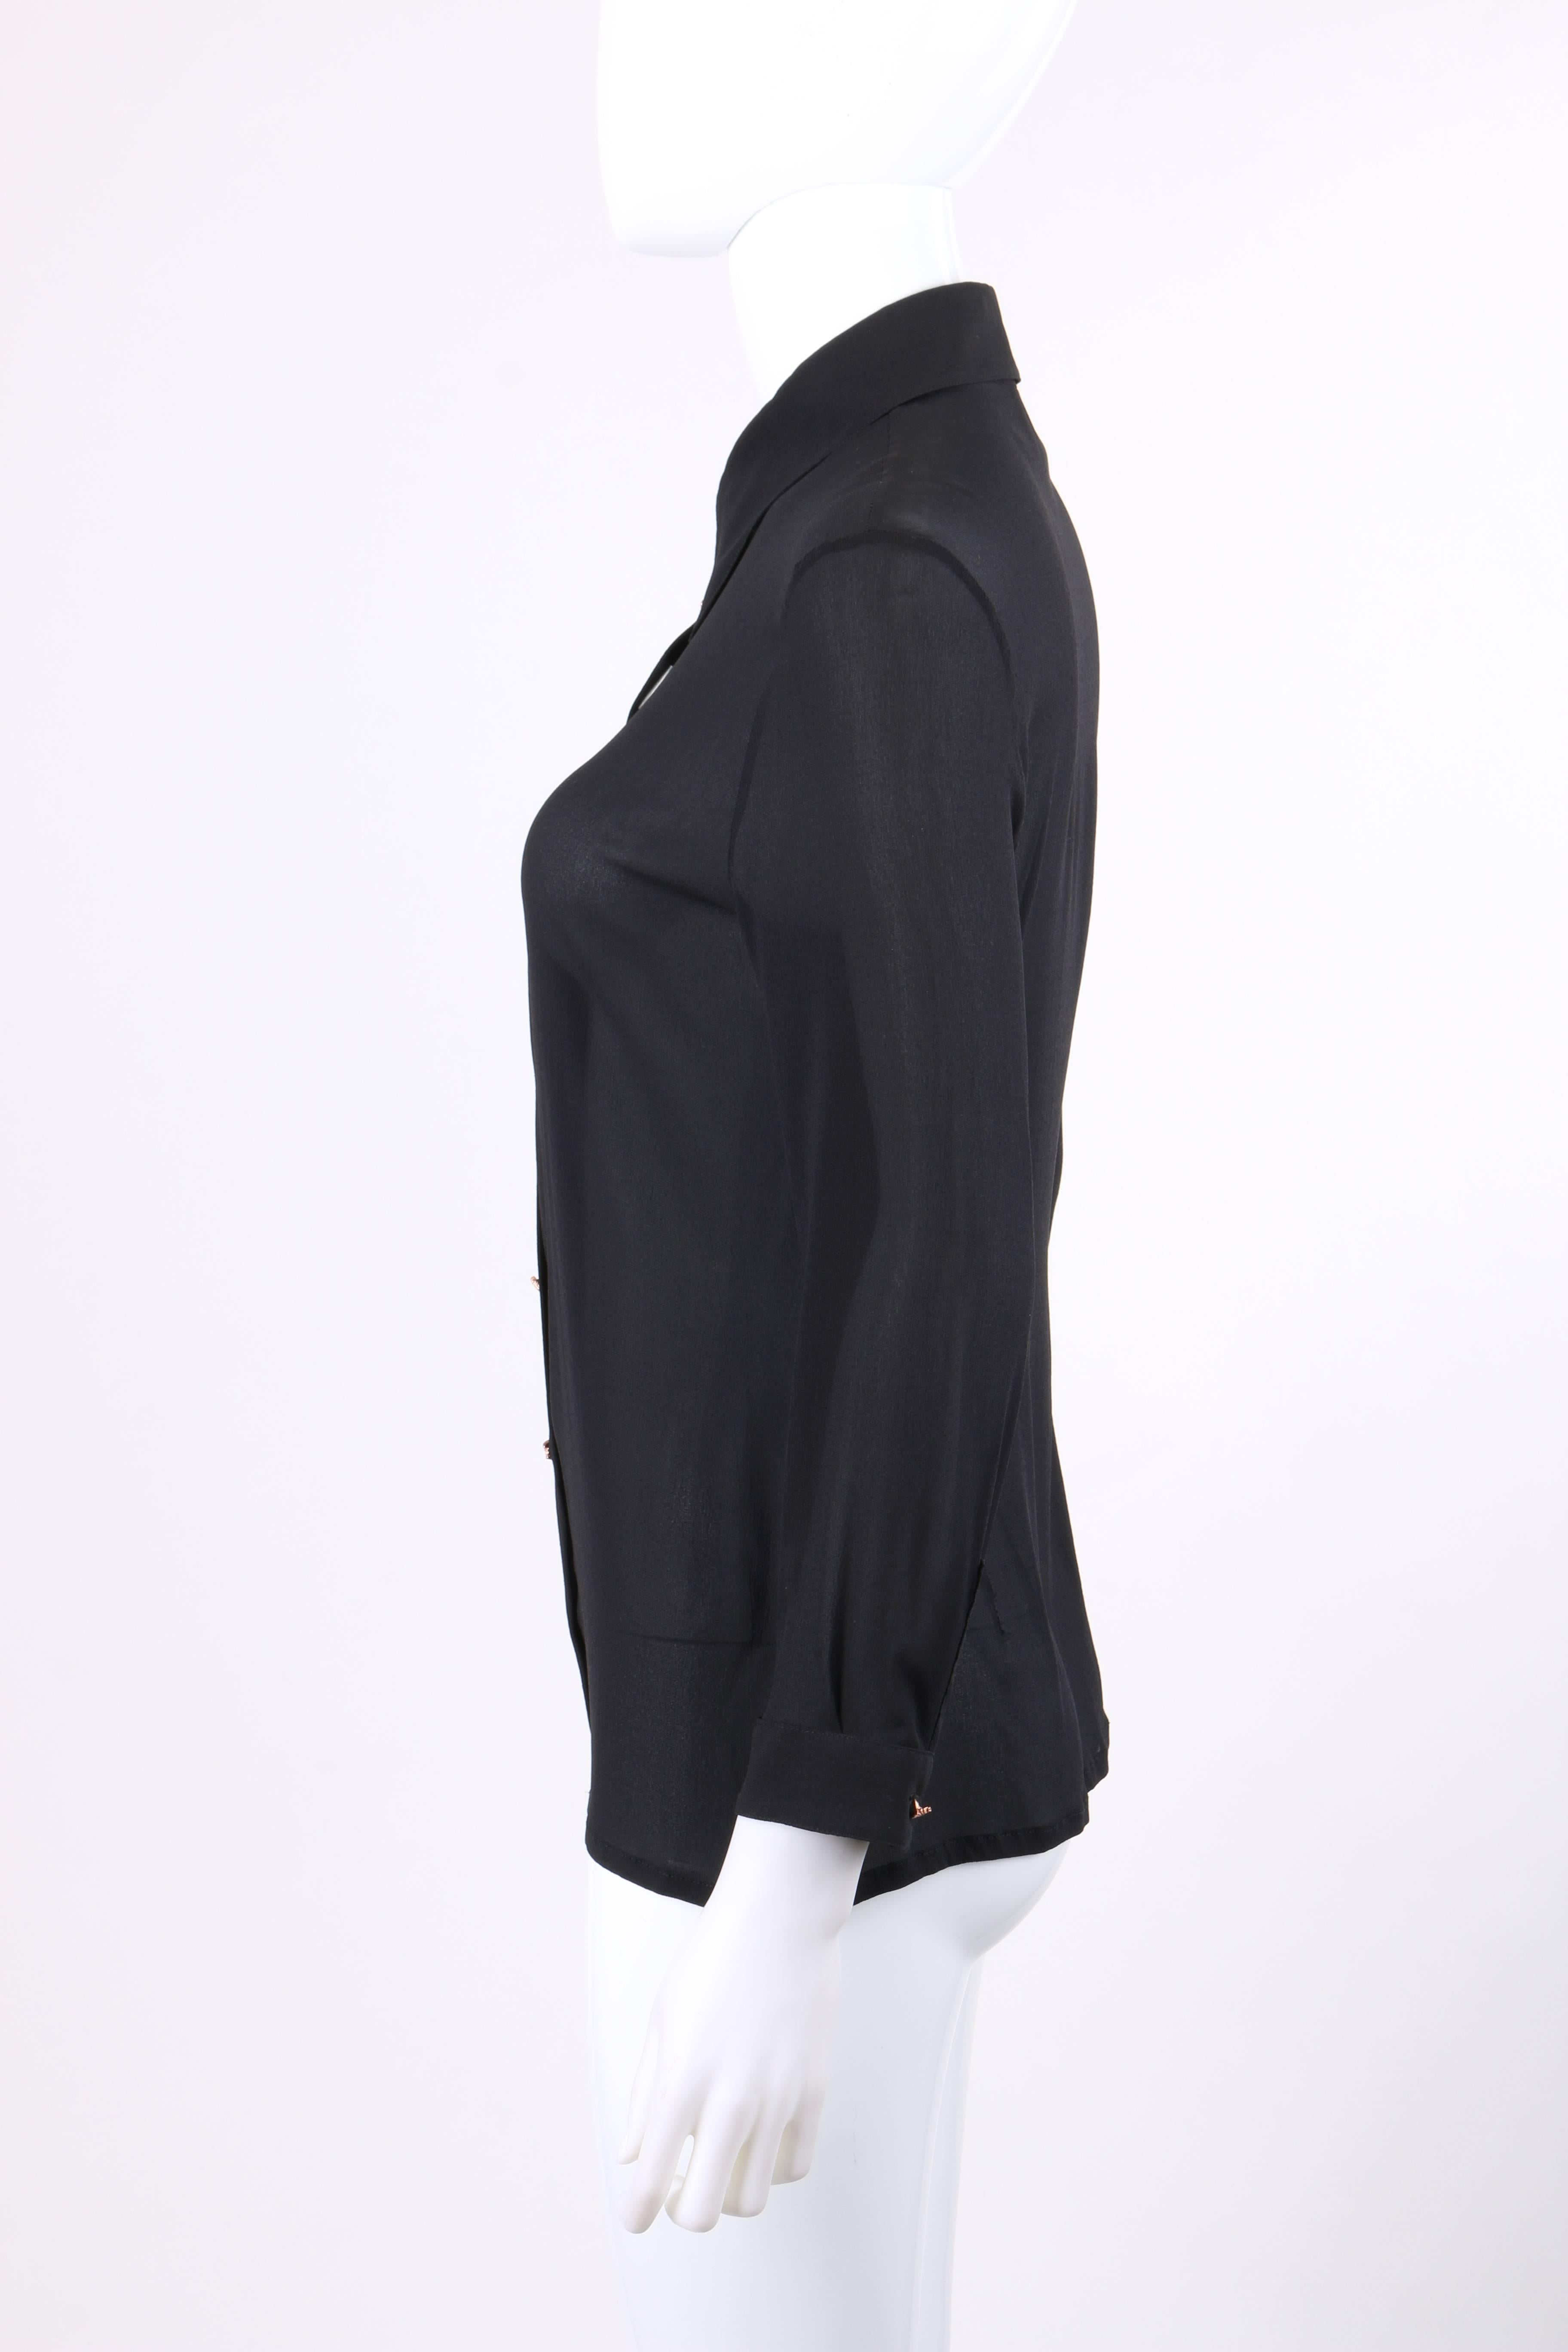 GIANNI VERSACE Couture S/S 1999 Black Silk Chiffon Medusa Head Button Up Shirt 1